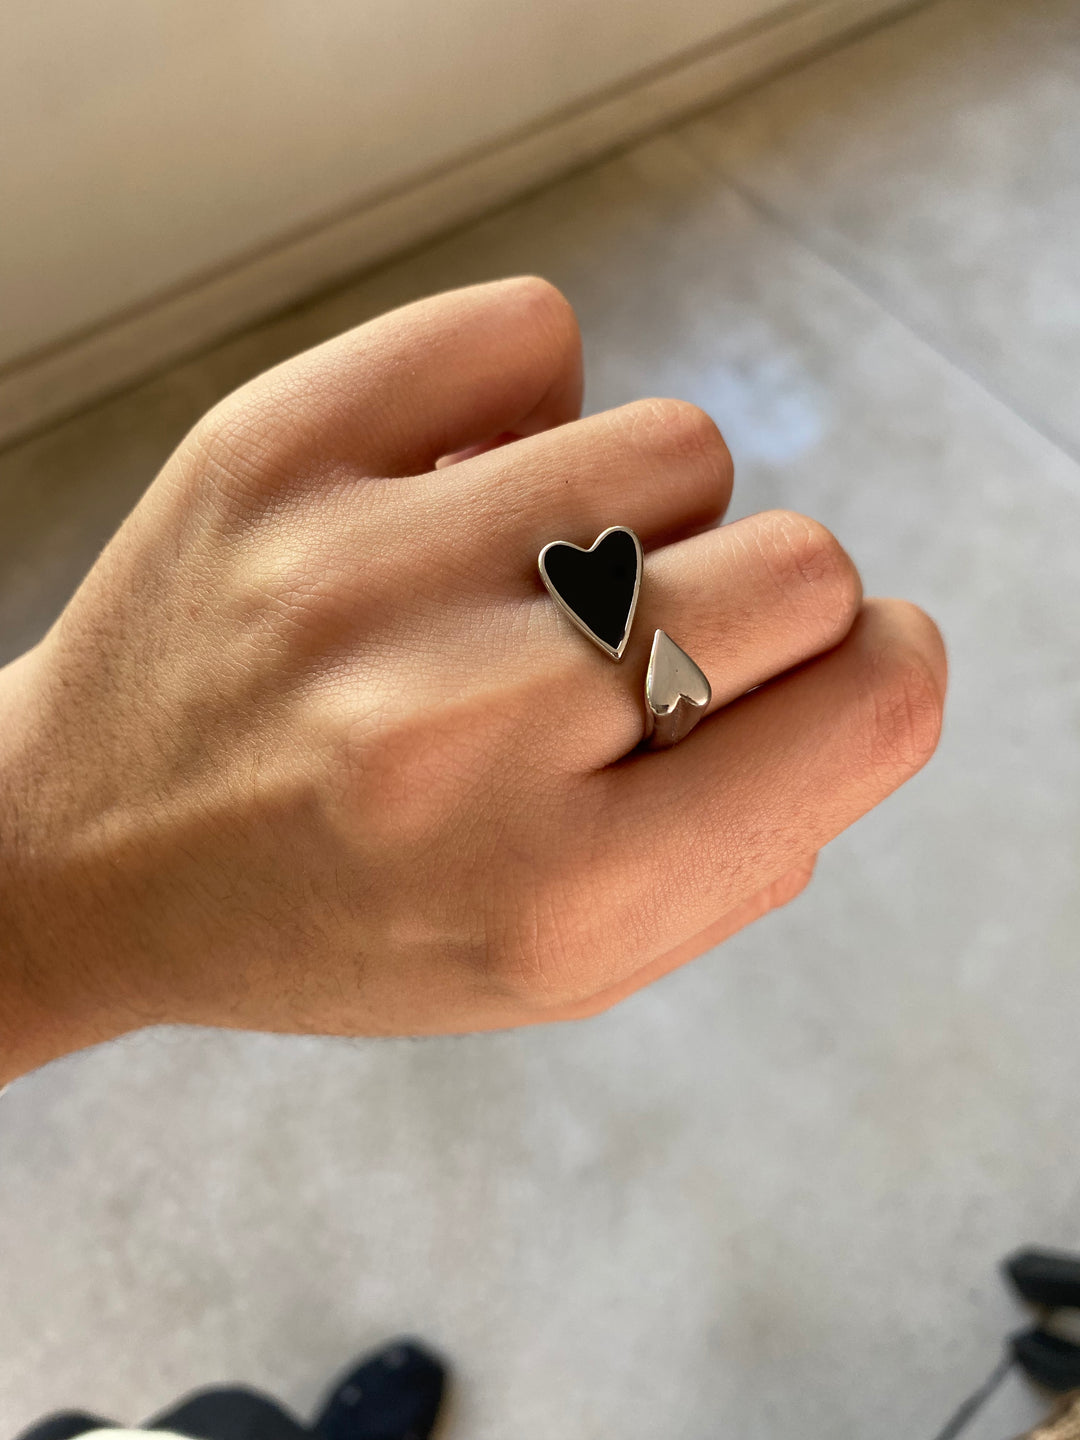 Queen of Hearts Ring